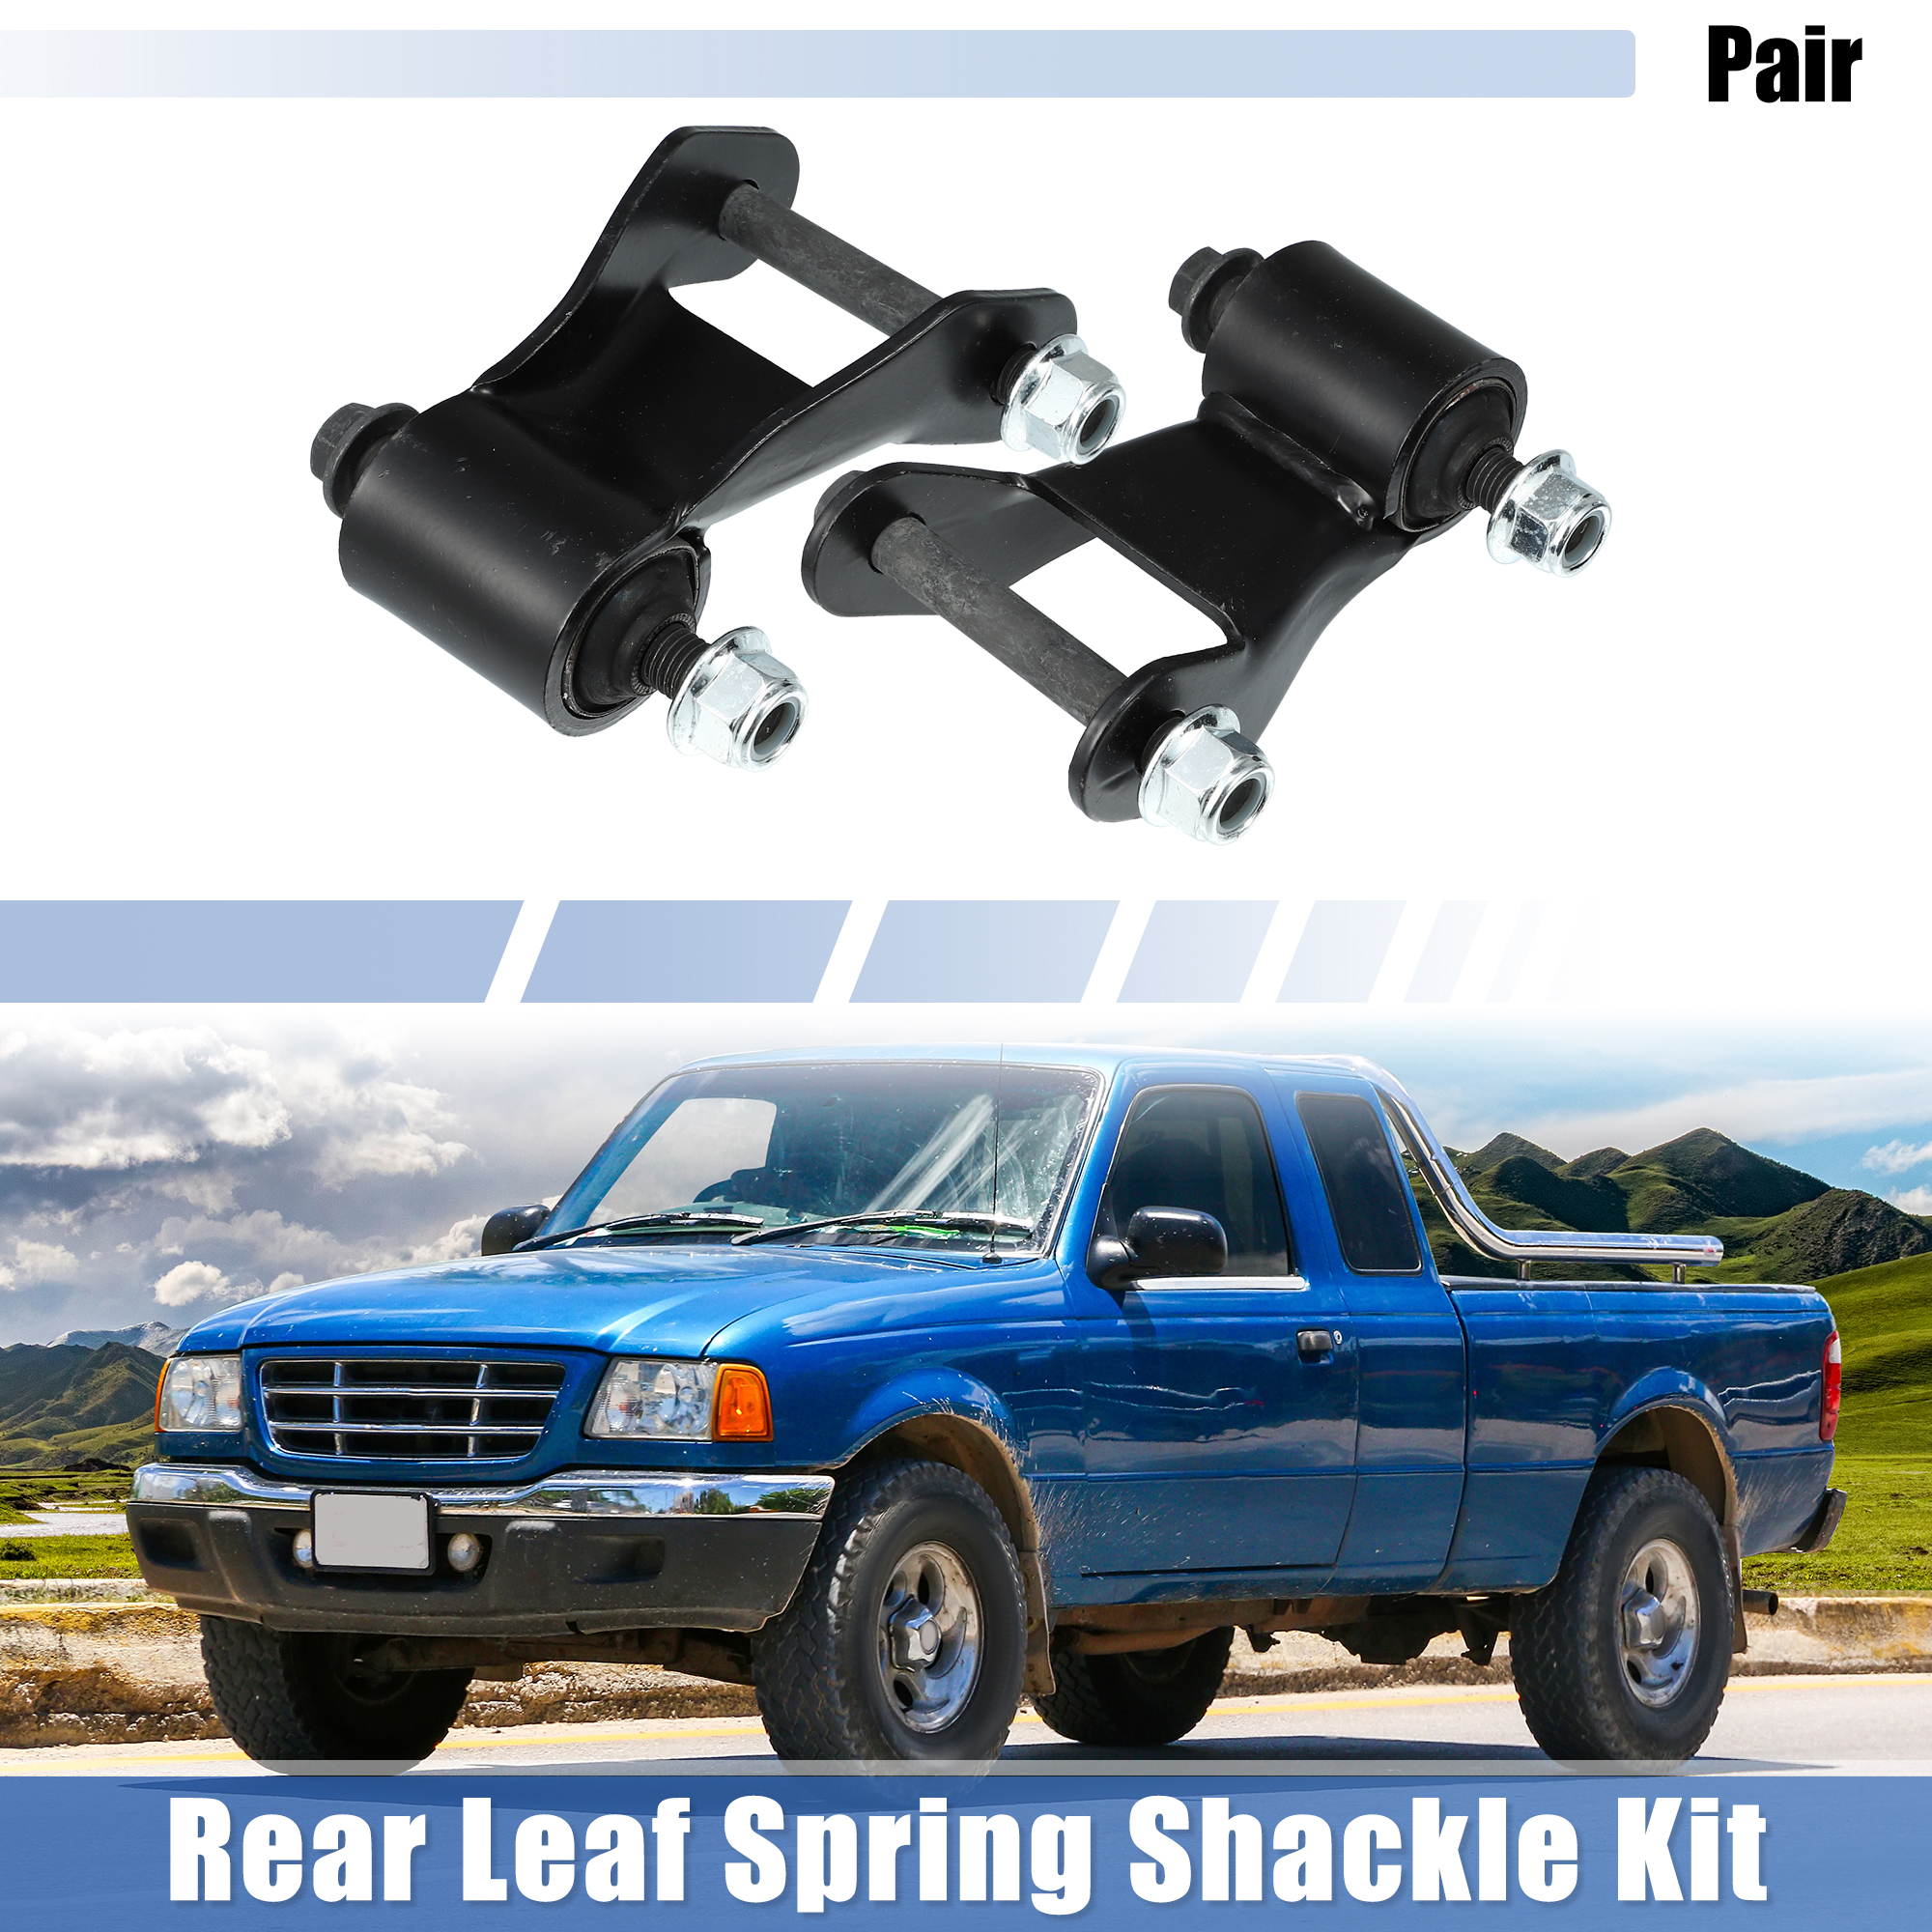 Unique Bargains 1 Pair Rear Leaf Spring Shackle Kit 22820716 for GMC Sierra for Chevy Silverado